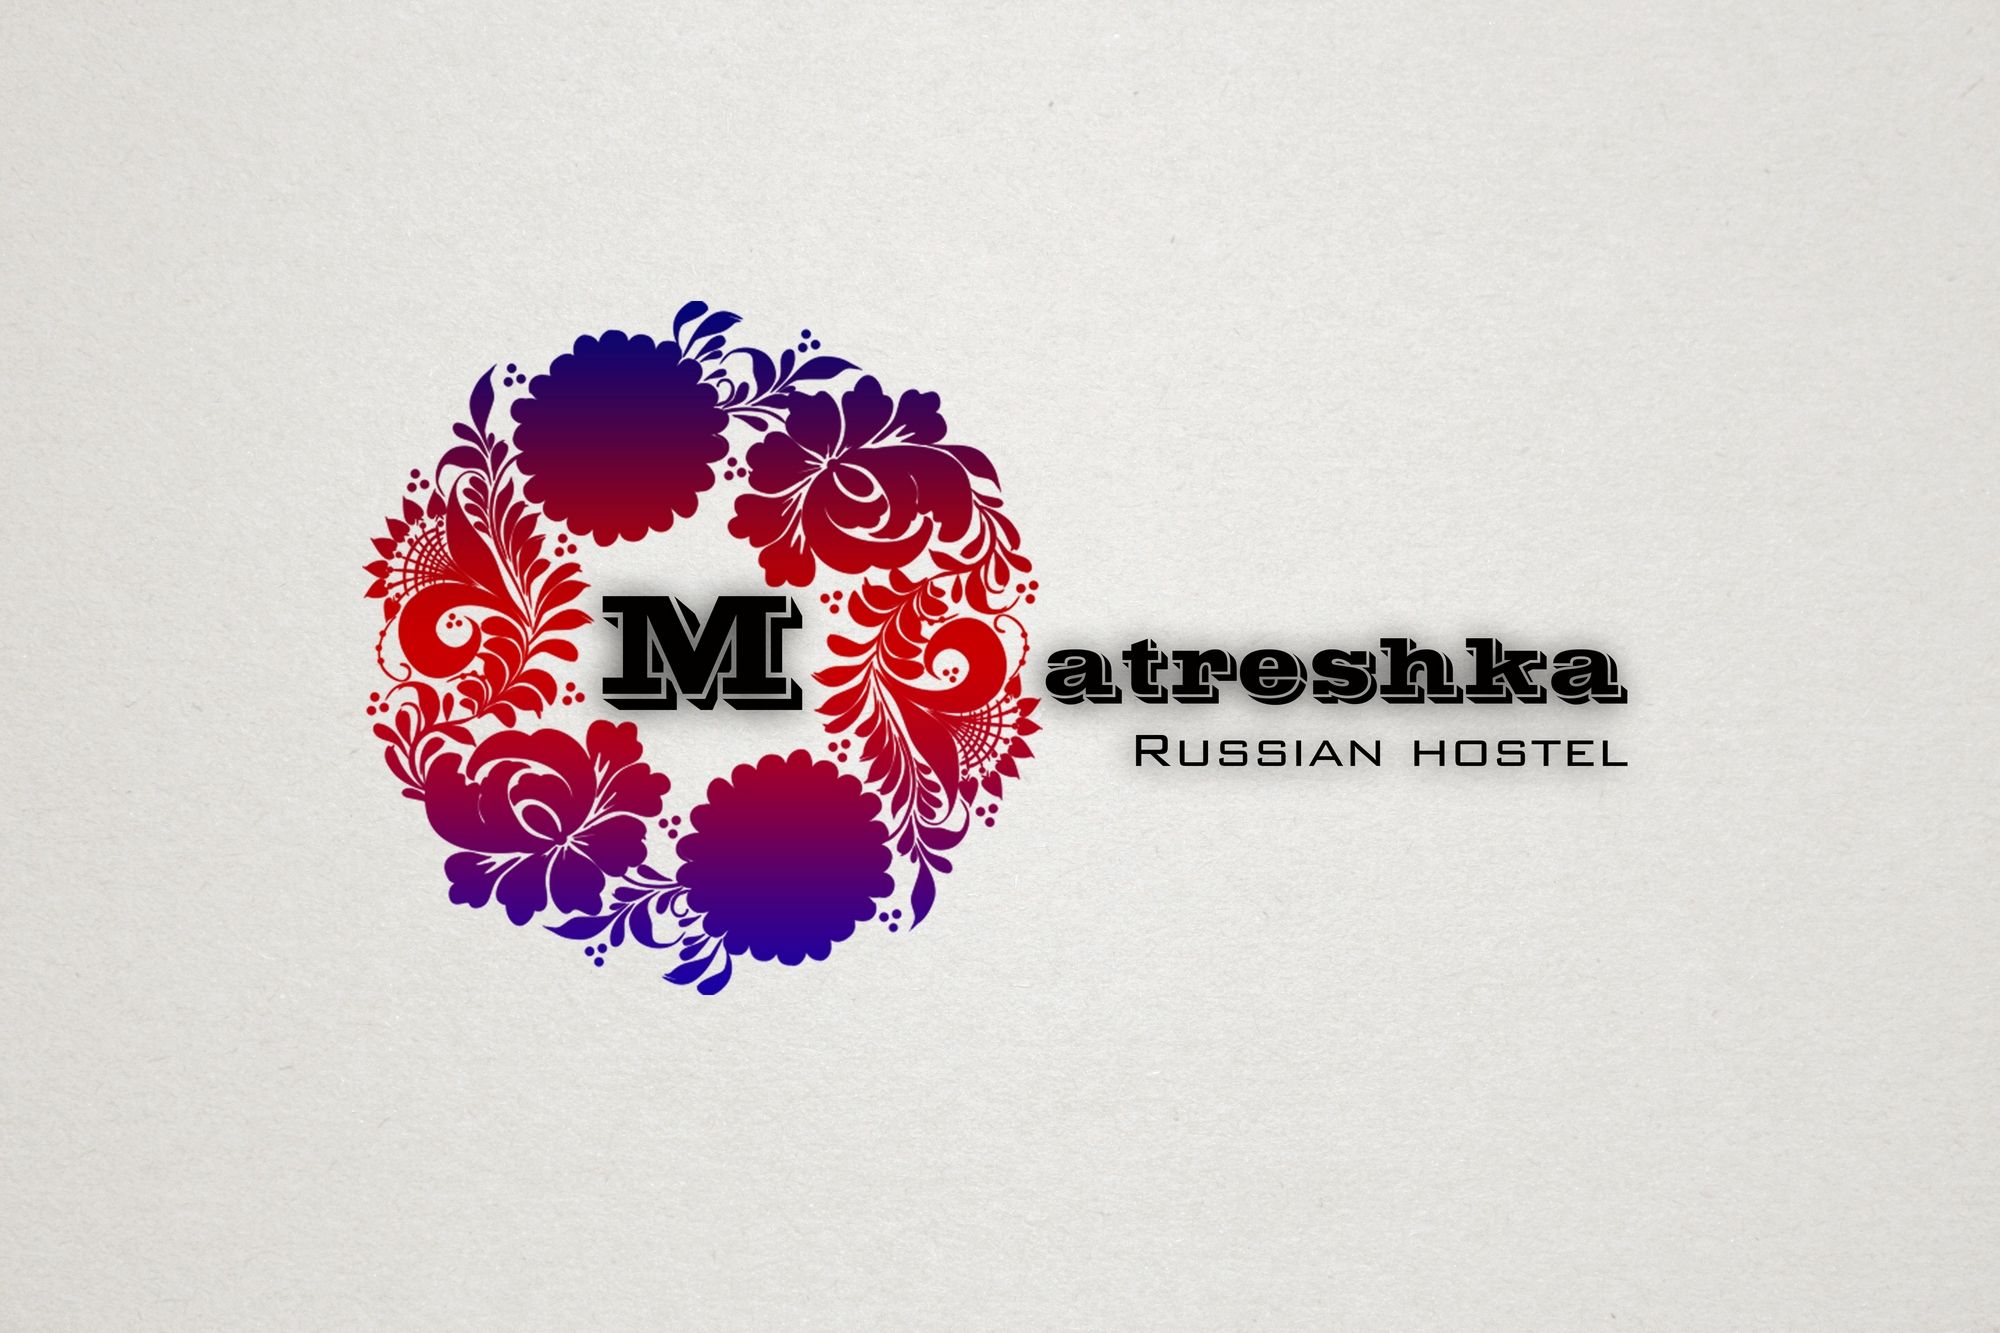 Логотип MATRESHKA Russian hostel - дизайнер Nikon_077